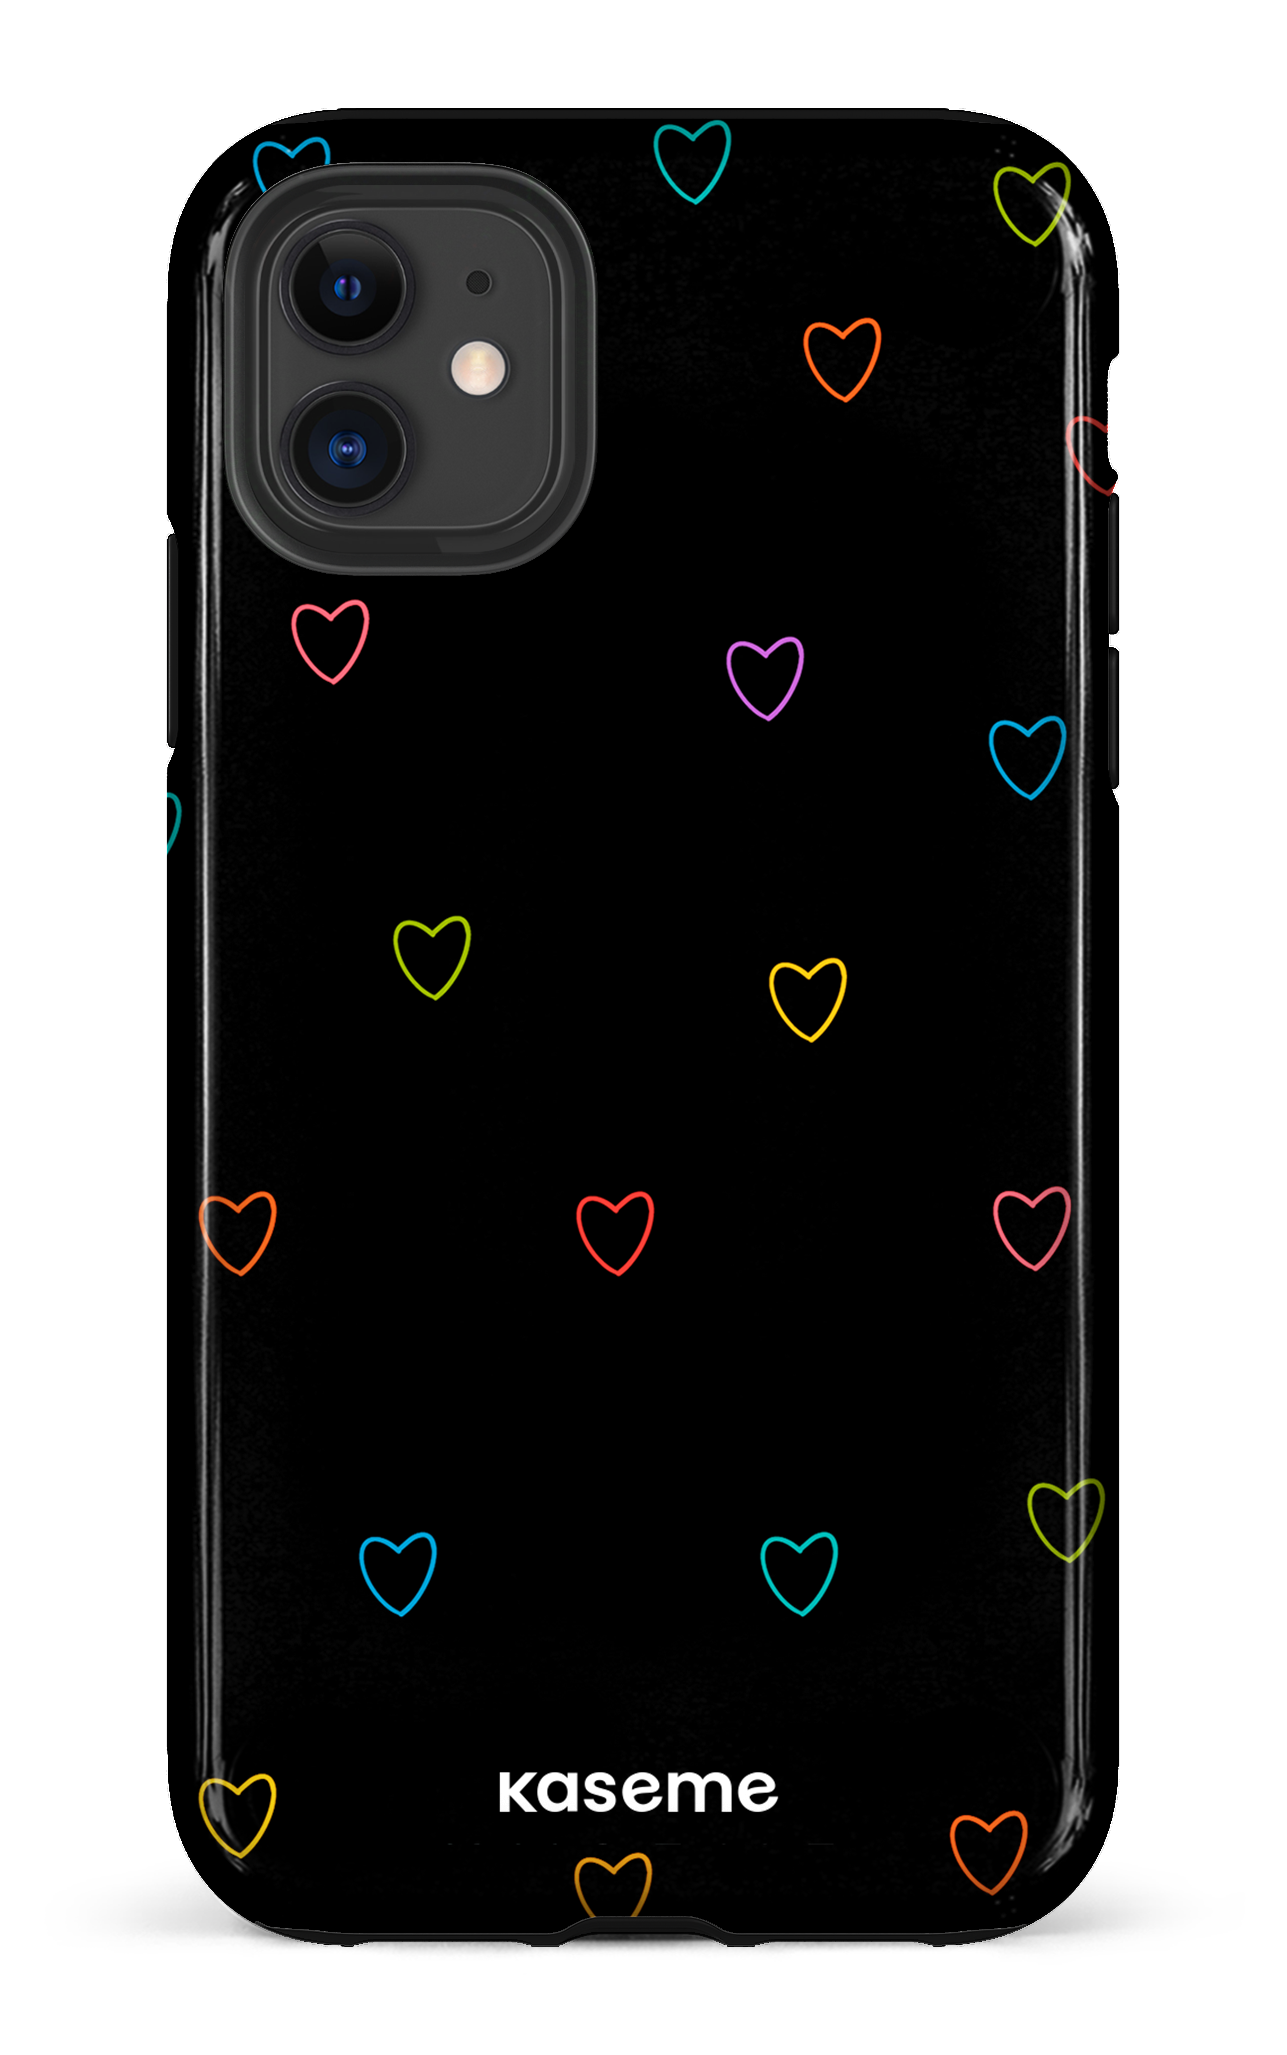 Love Wins - iPhone 11